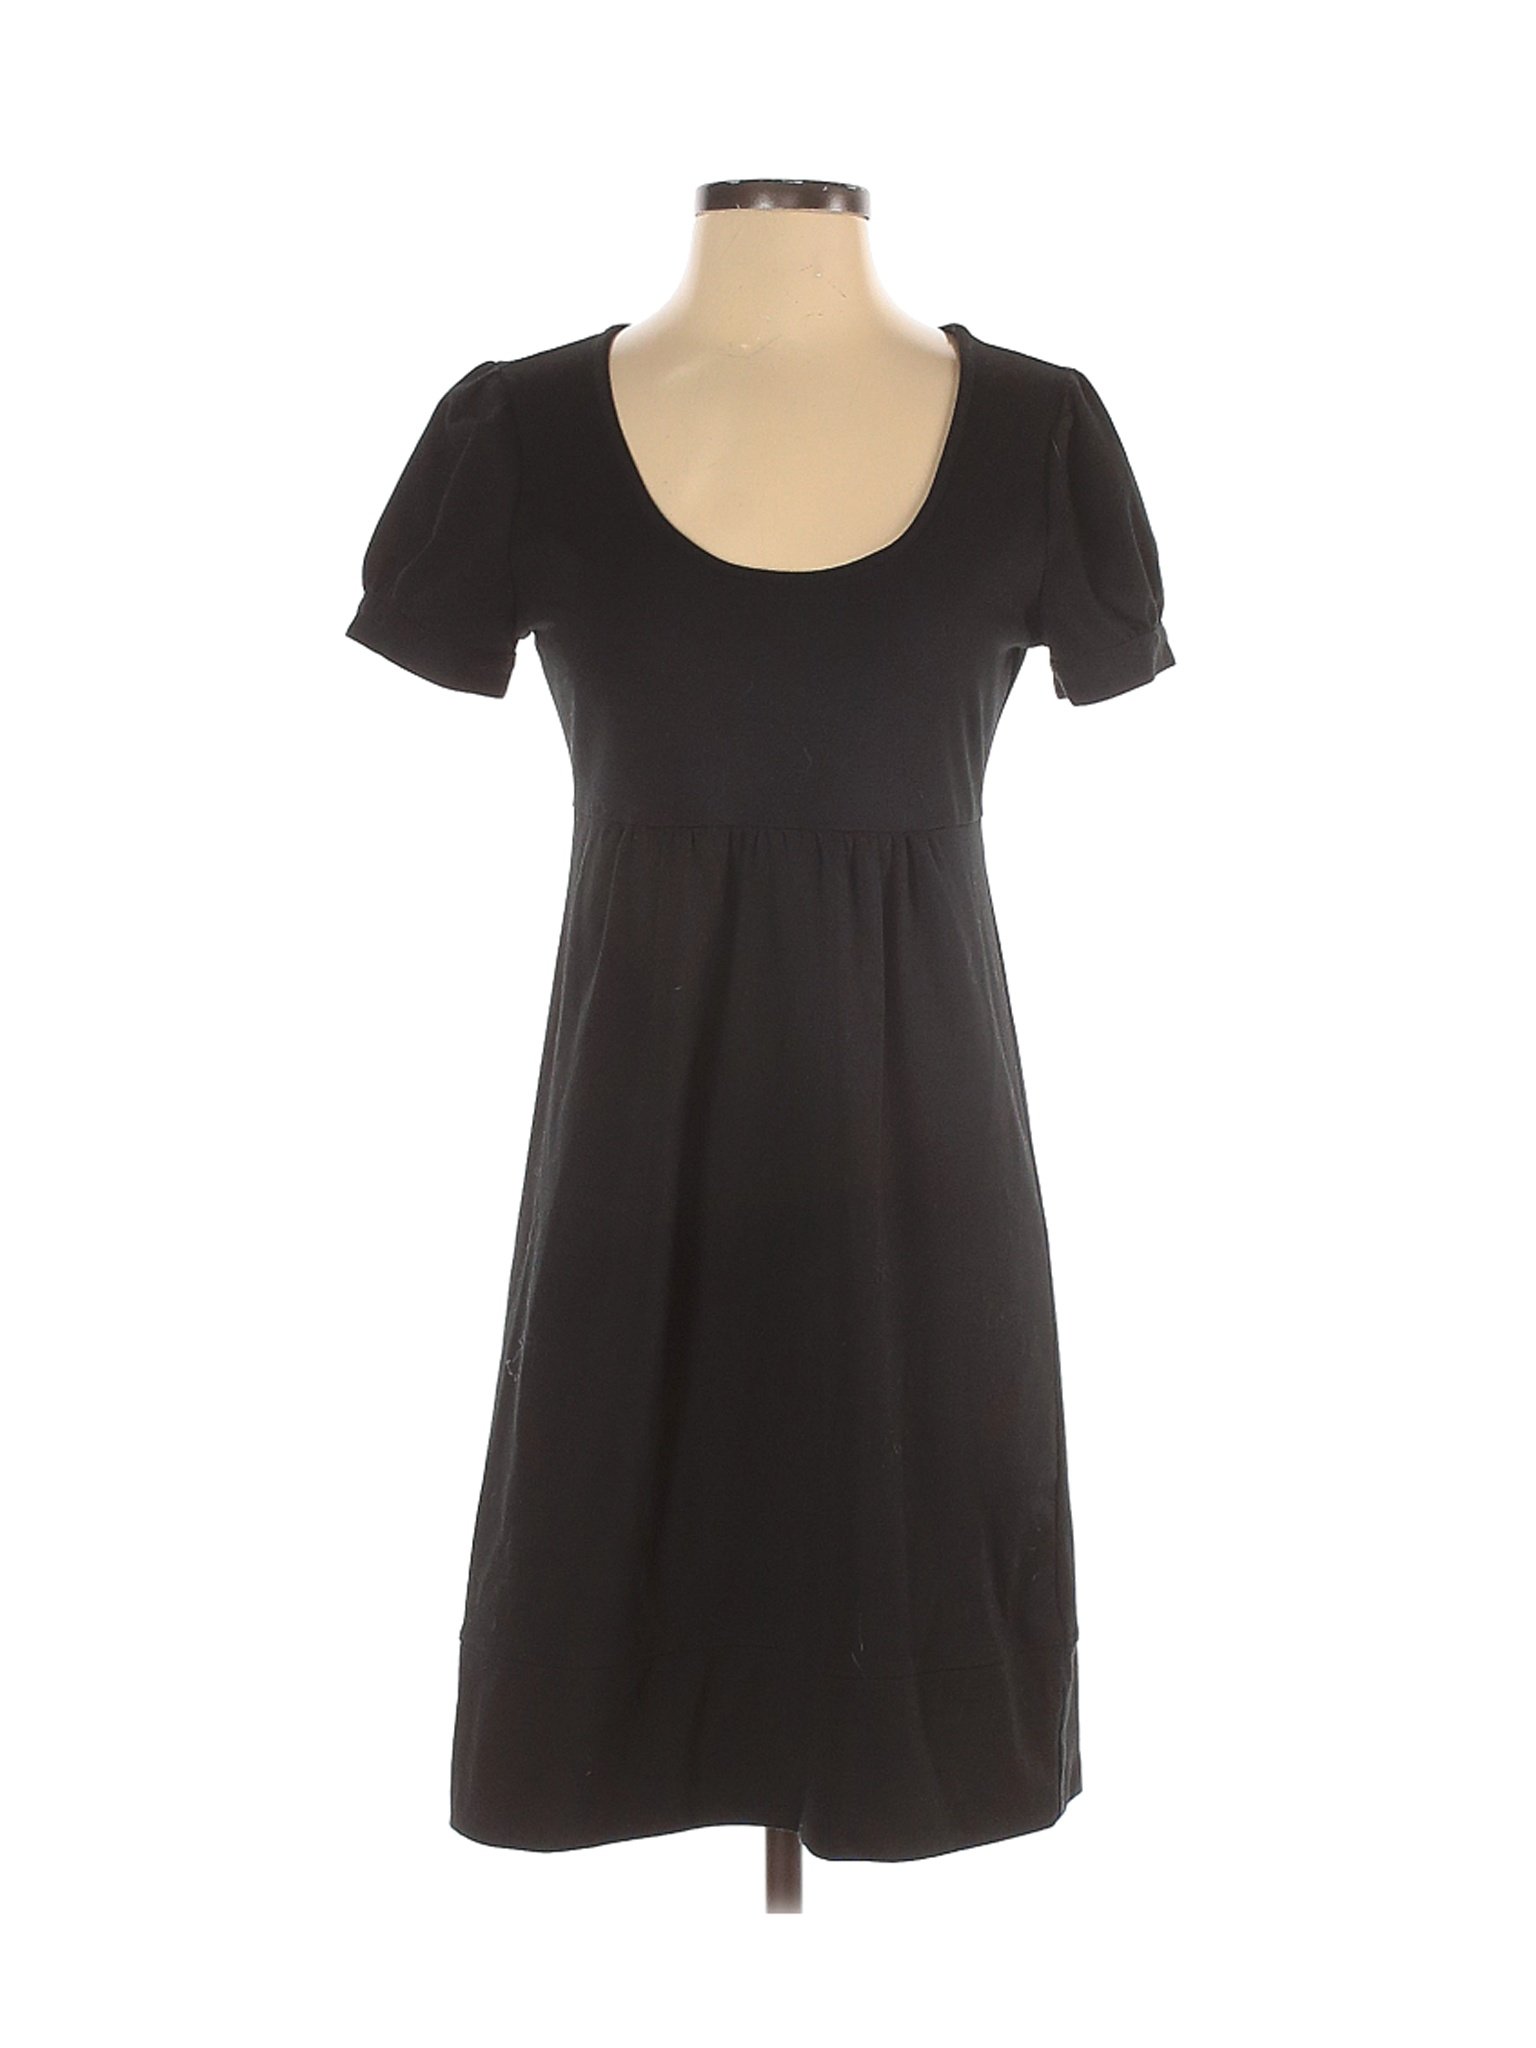 Banana Republic Factory Store Women Black Casual Dress S | eBay